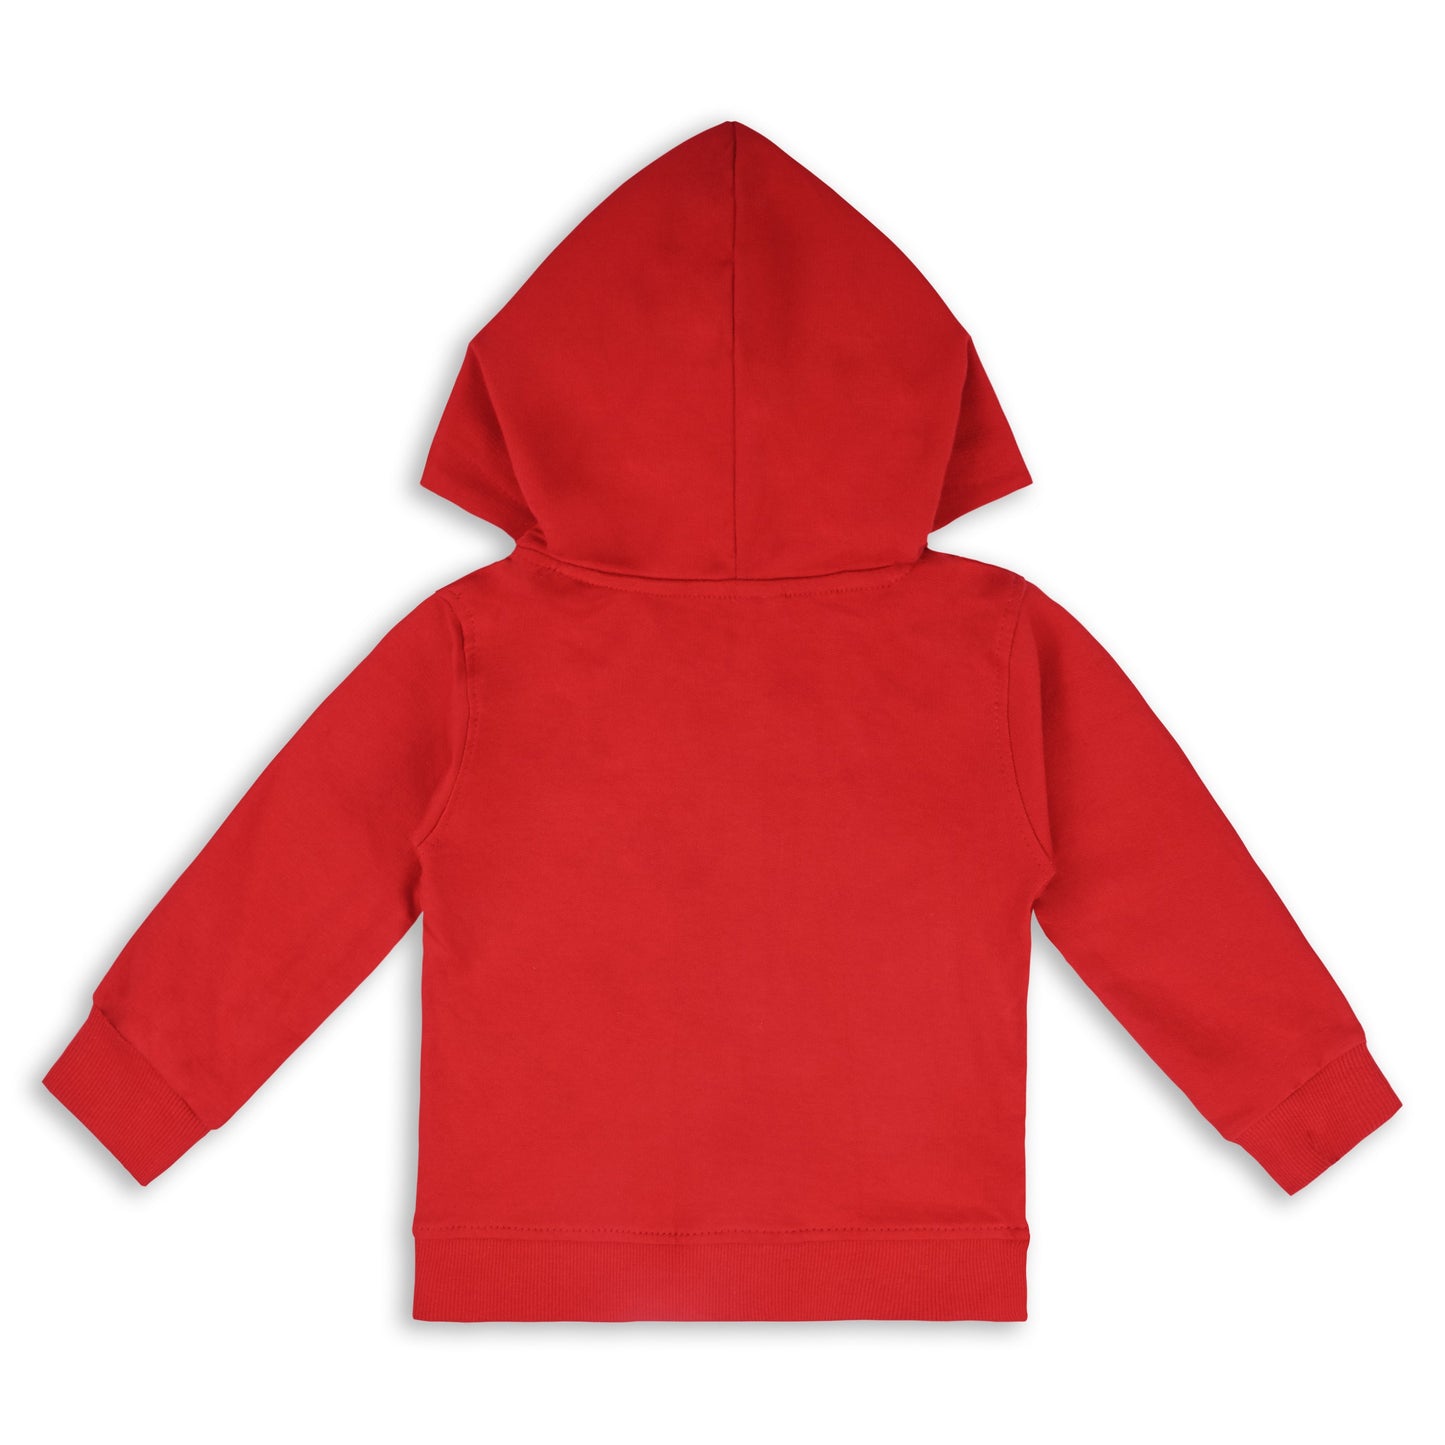 Wishkaro Unisex Cotton Applique Full Sleeve Hooded Sweatshirt-T302rd